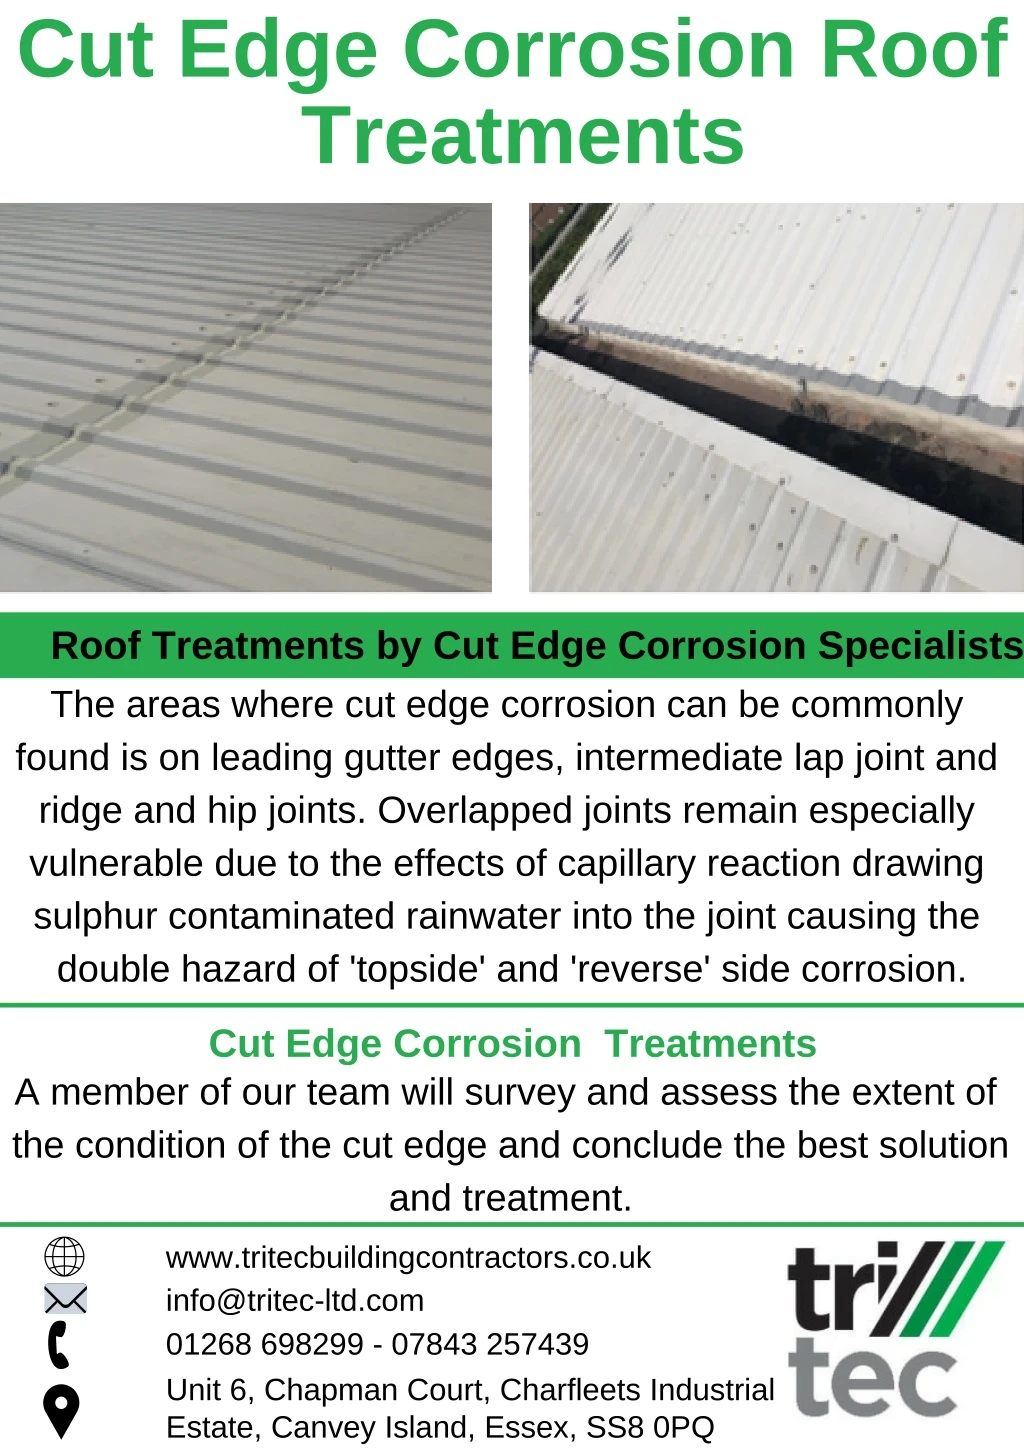 cut edge corrosion roof treatments